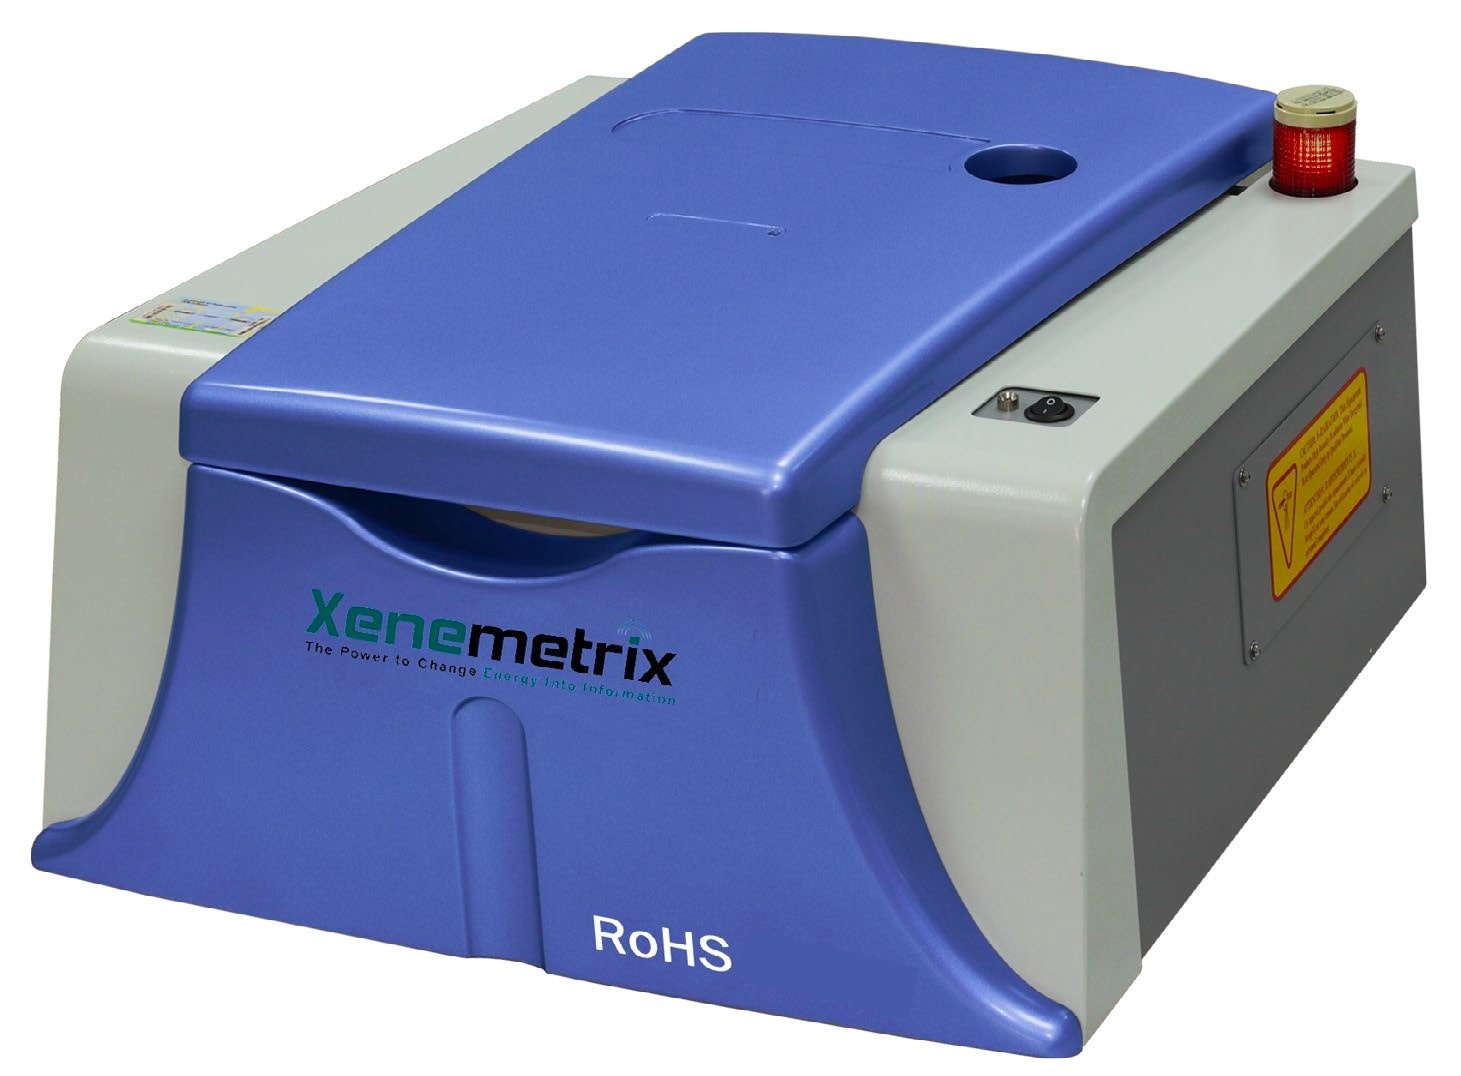 Xenemetrix X射线荧光光谱仪RoHS的图片